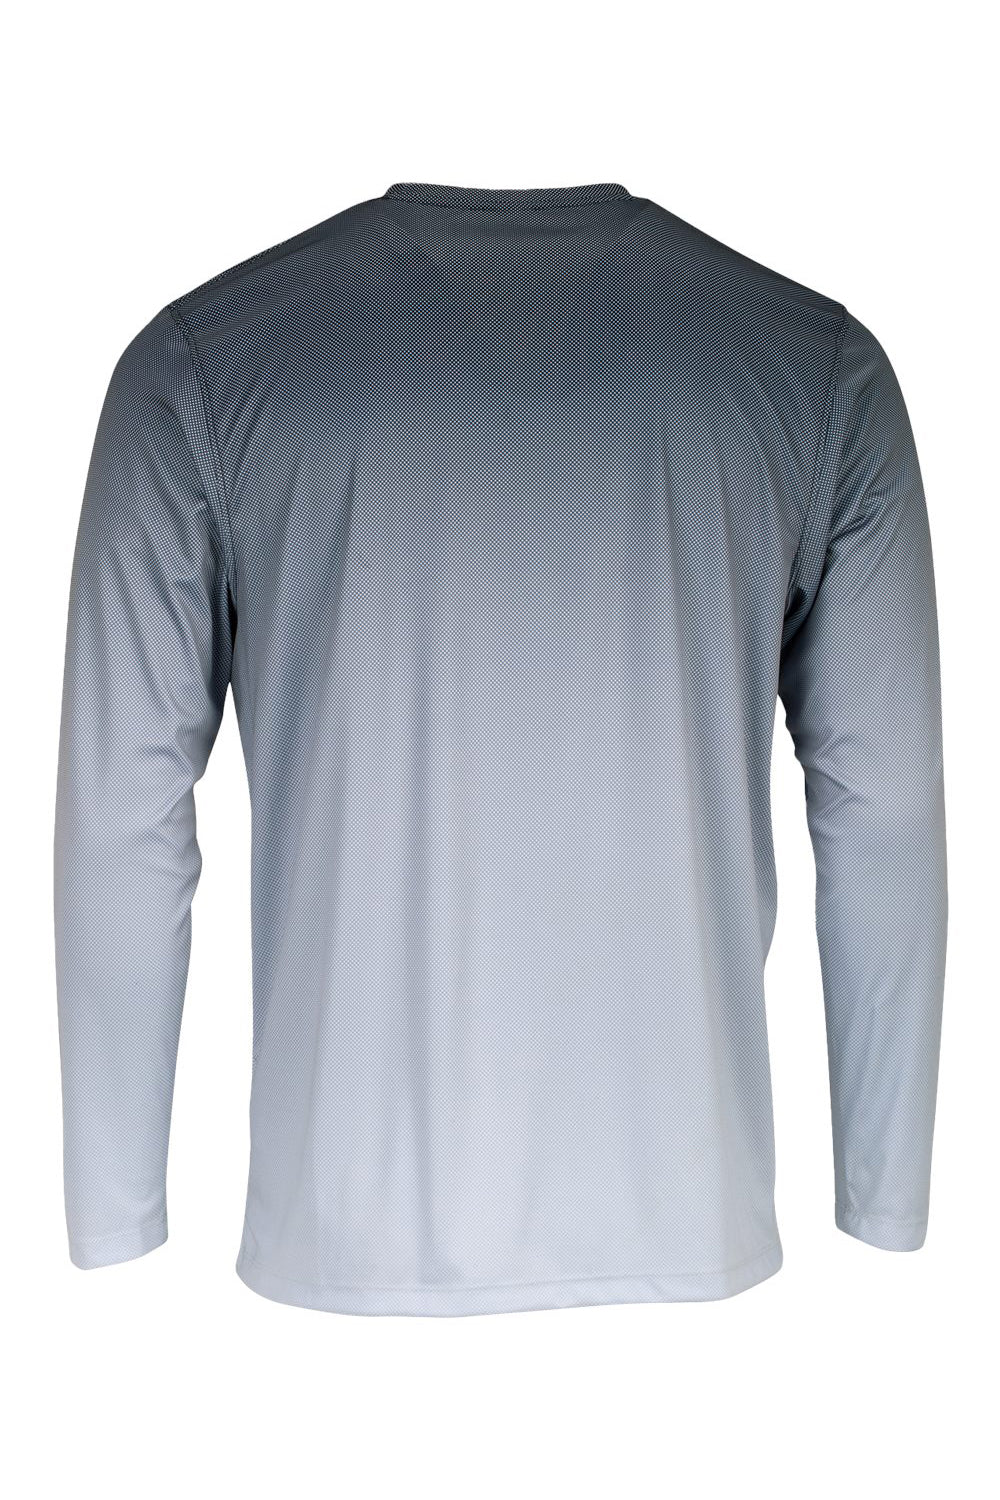 Paragon 225 Mens Barbados Performance Pin Dot Long Sleeve Crewneck T-Shirt Black/Light Charcoal Grey Flat Back